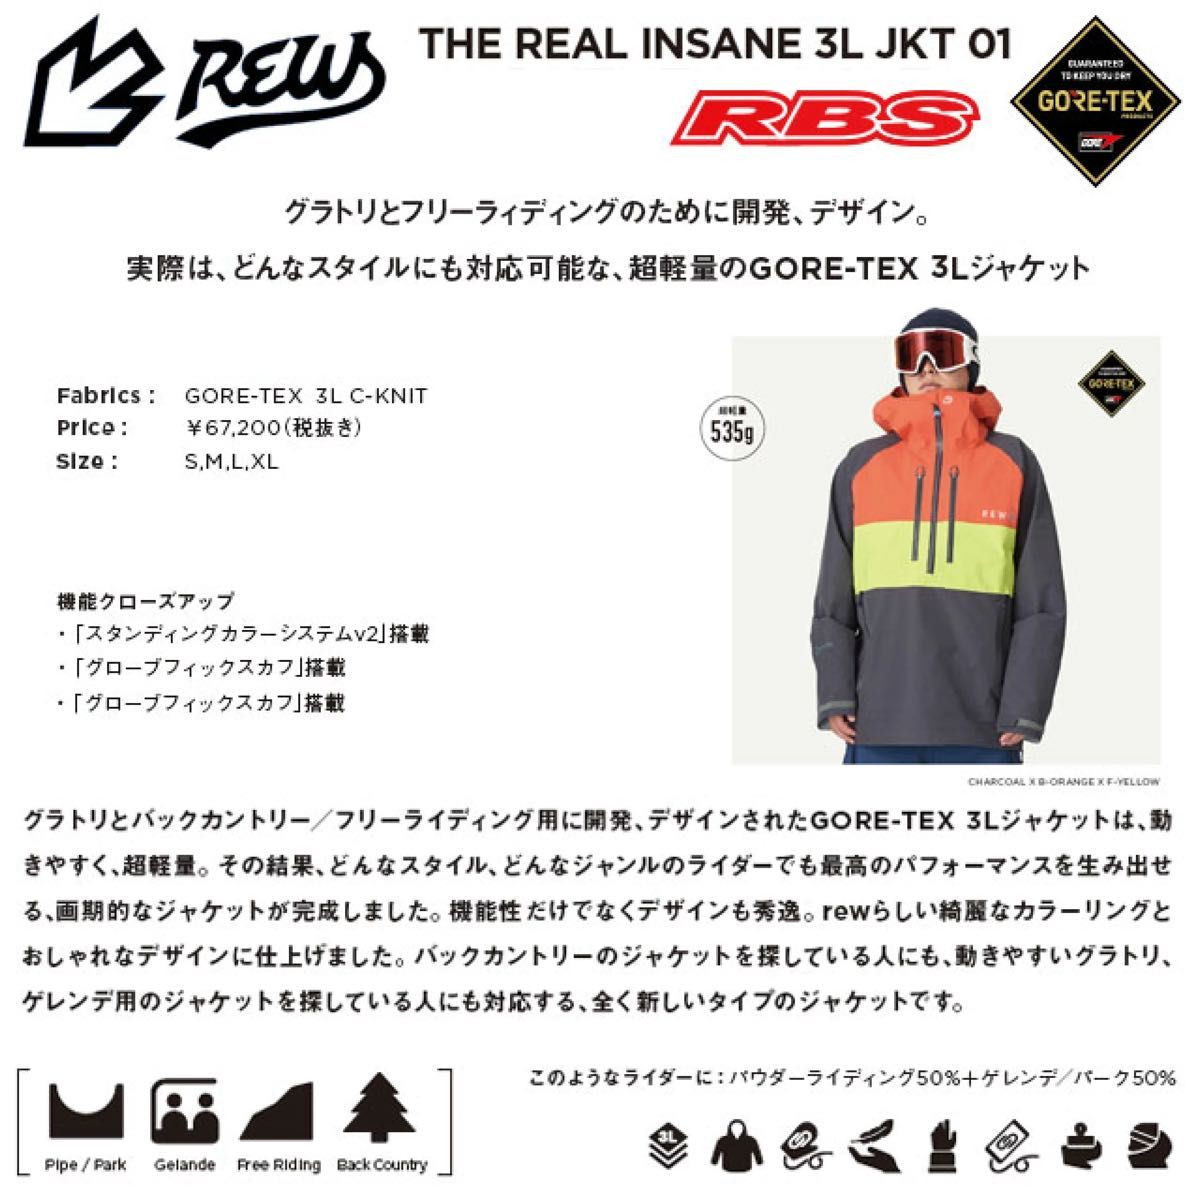 REW 21-22 THE REAL INSANE 3レイヤー GORE-TEX